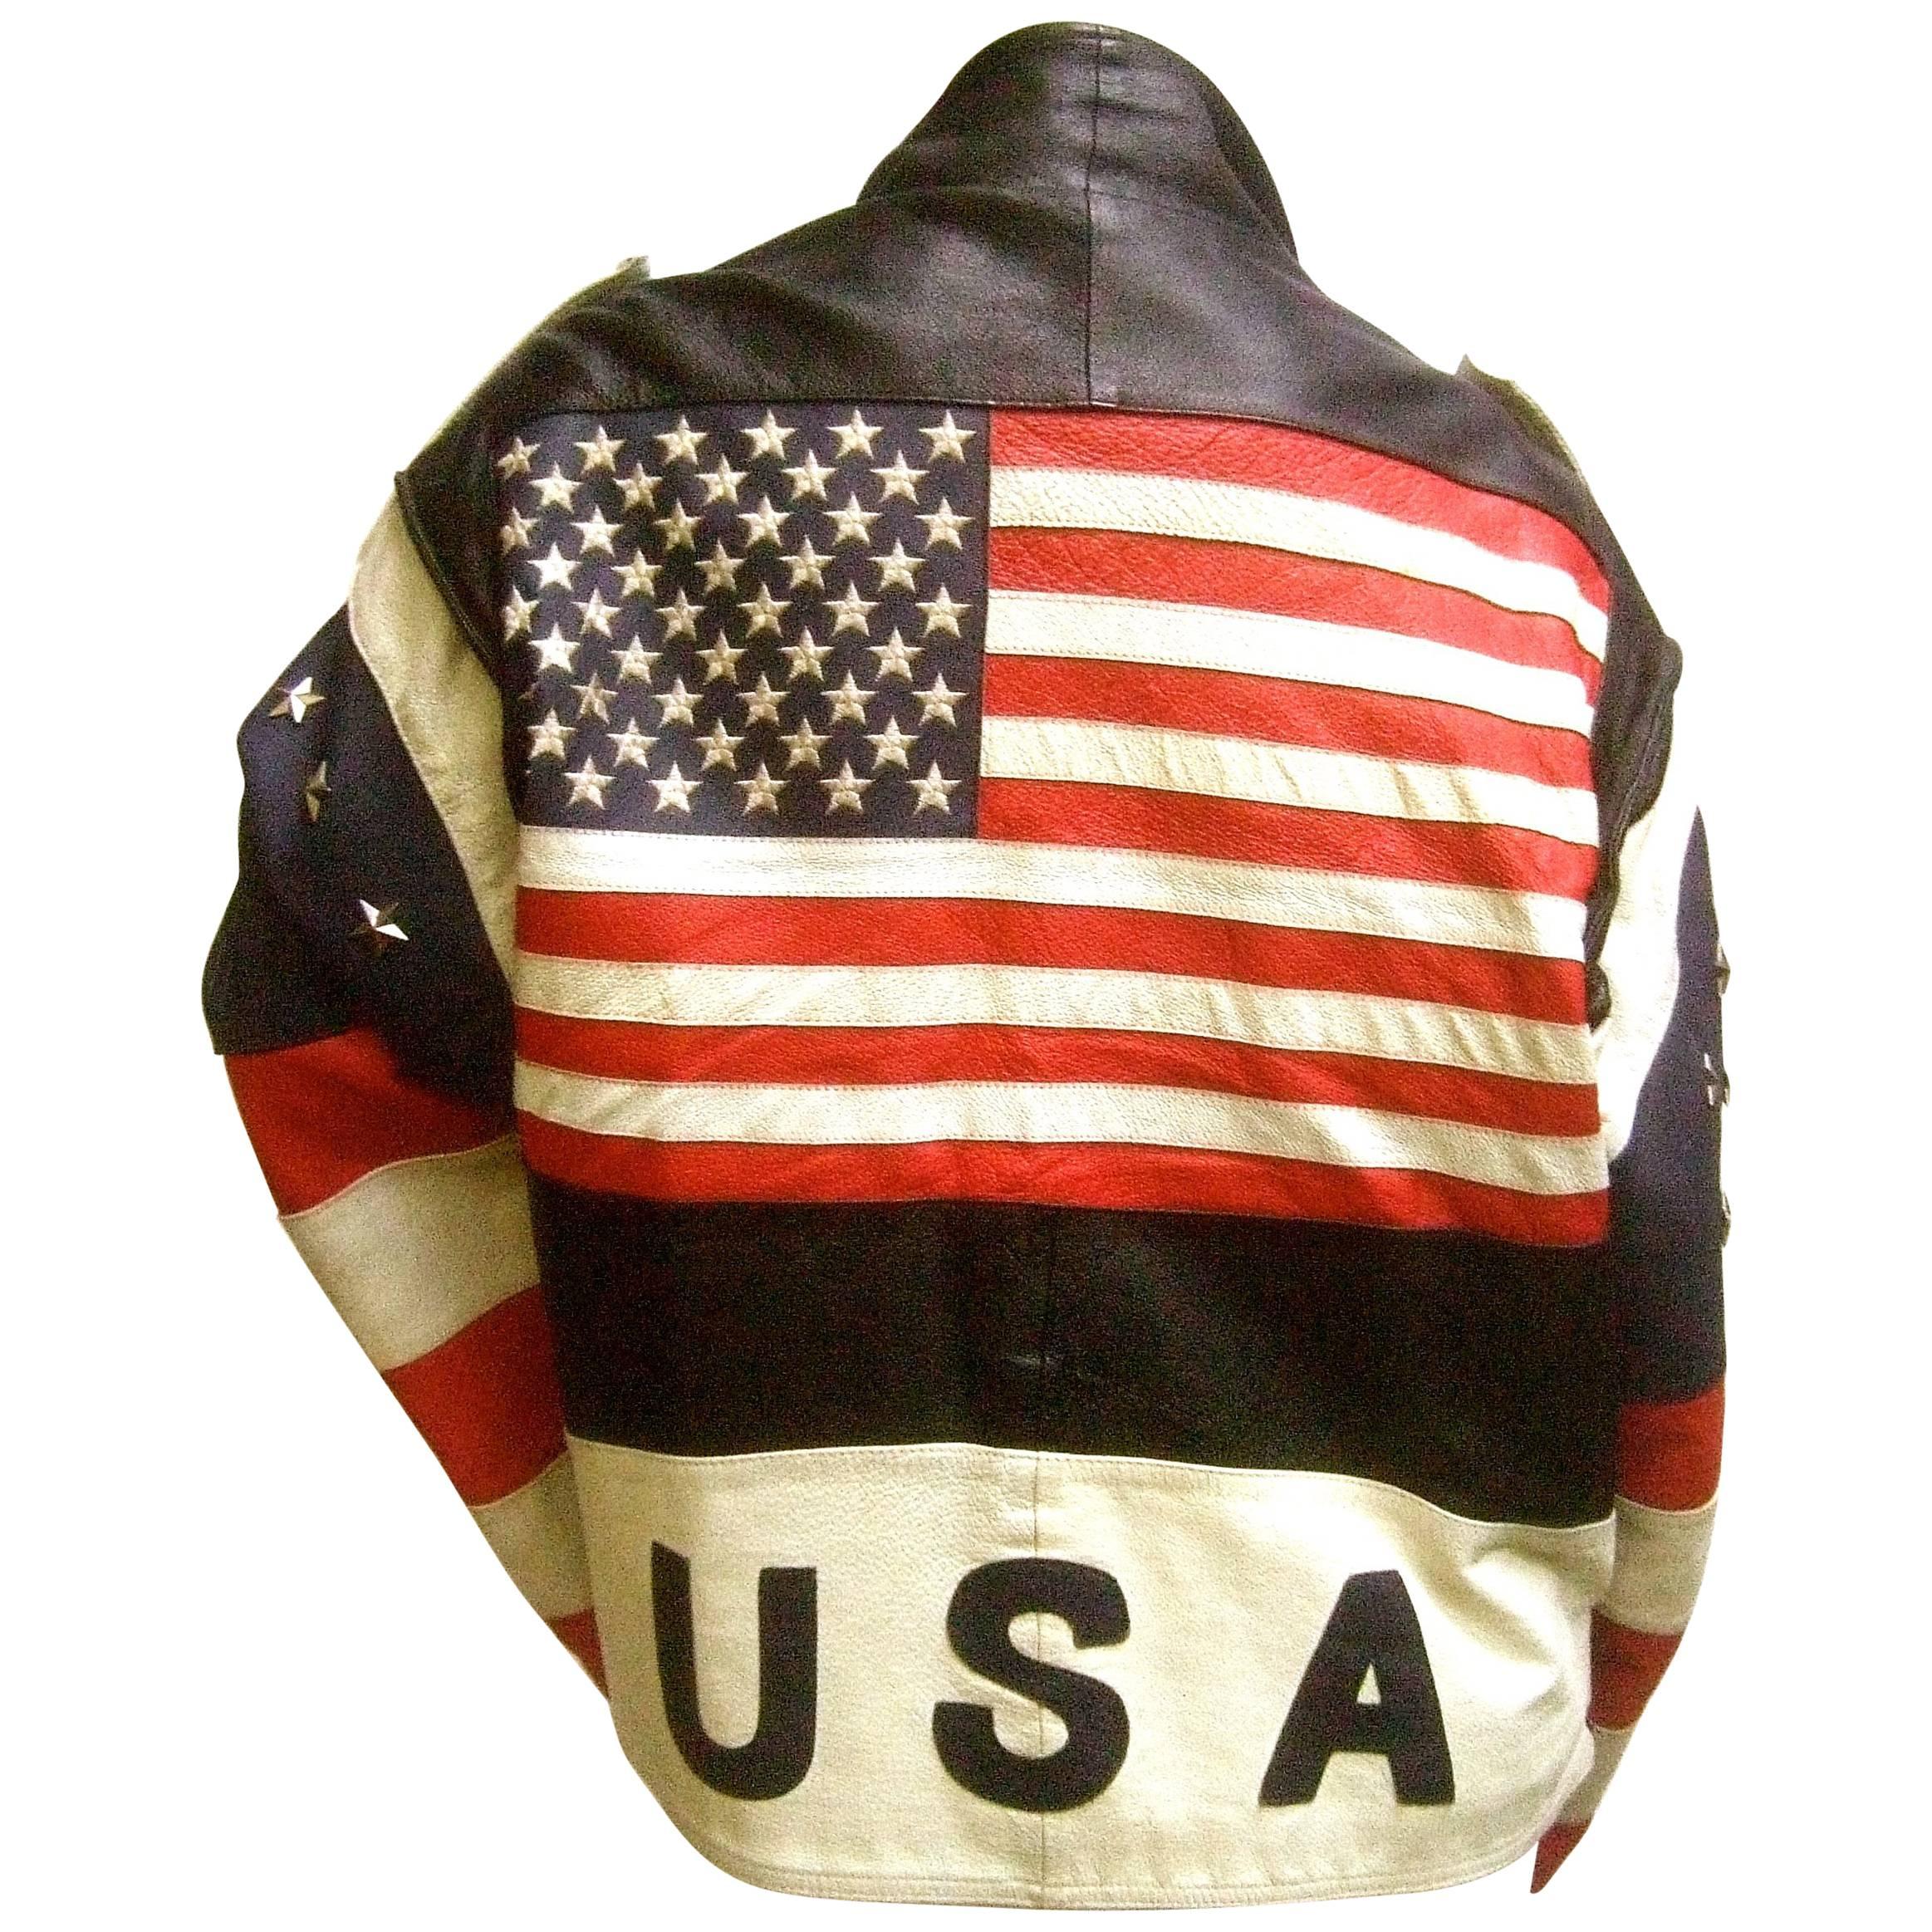 Men's Leather Patriotic American Flag Motorcycle Jacket ca 1980s